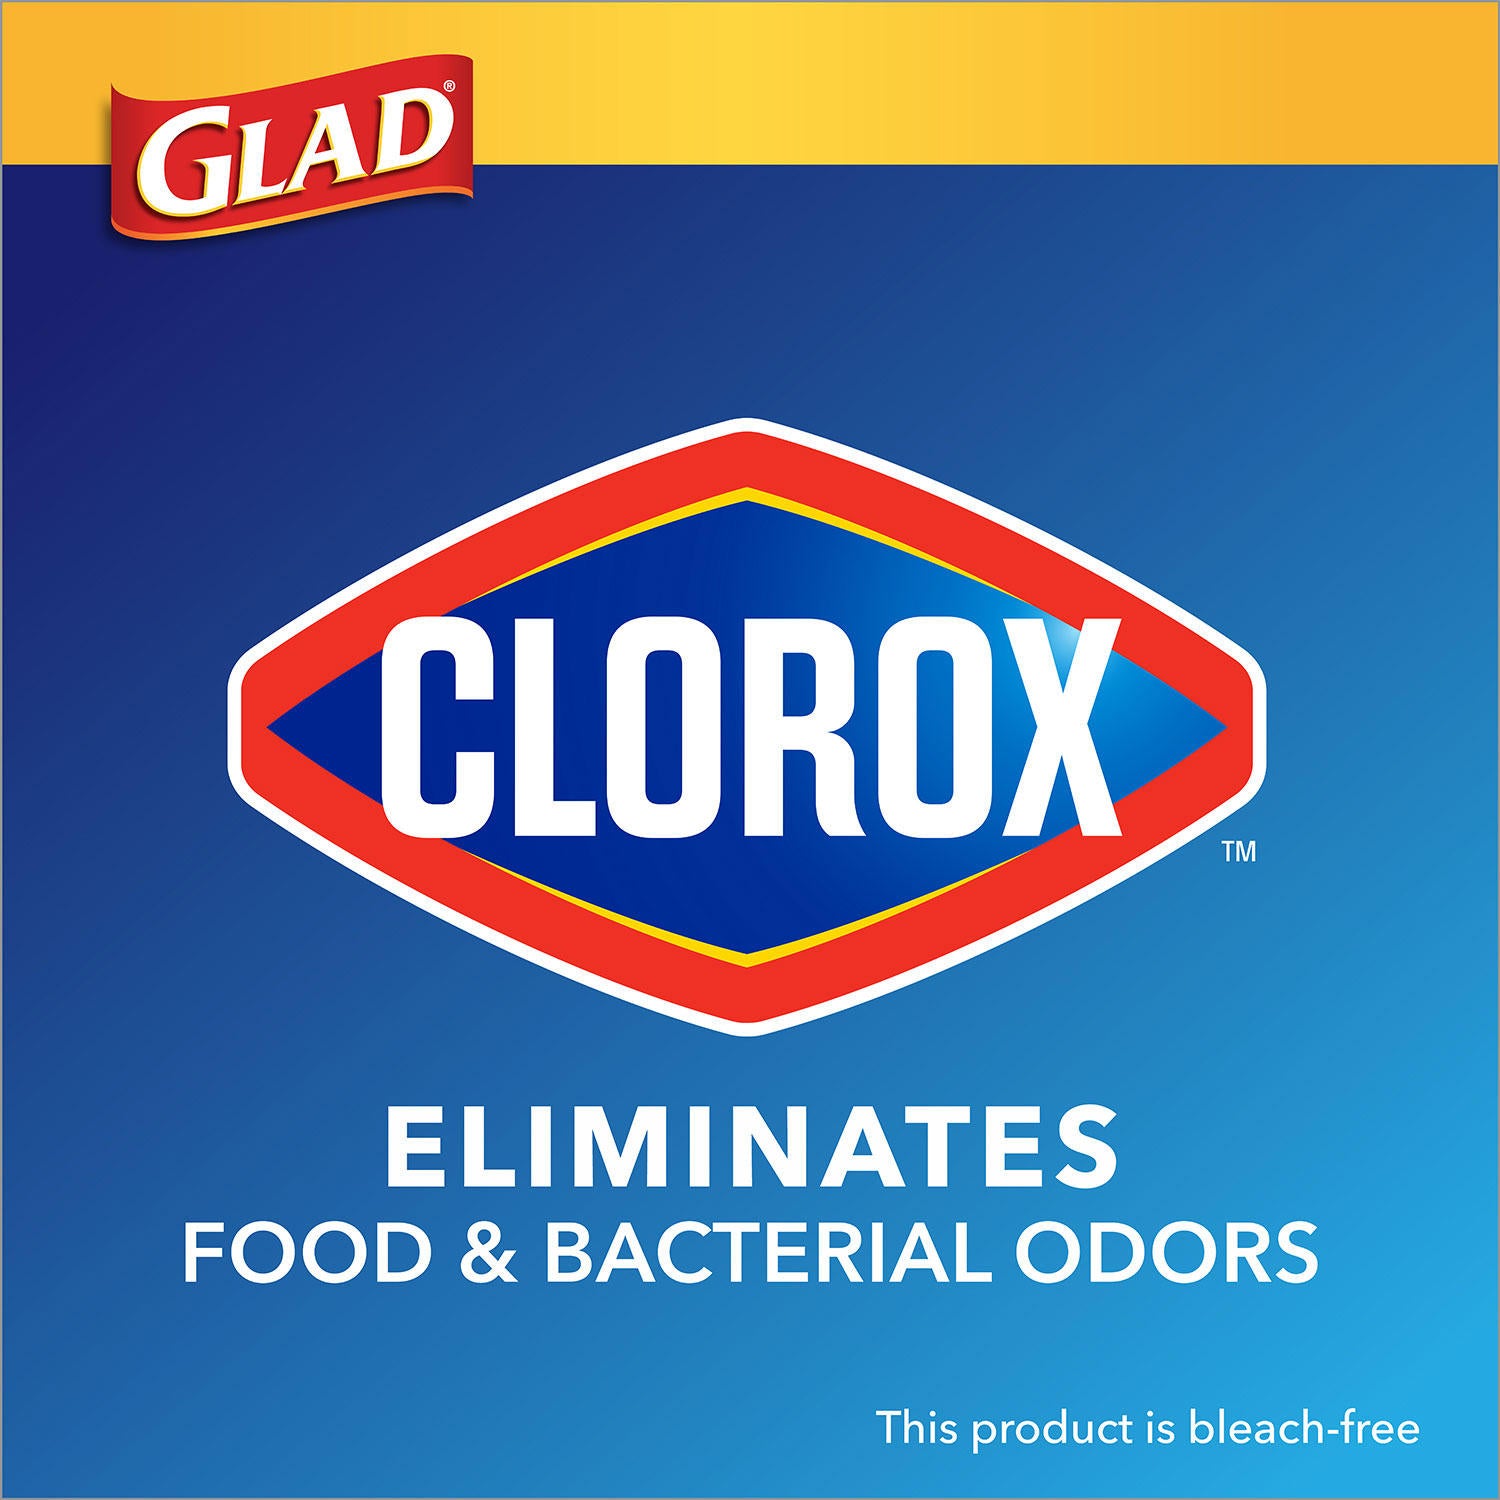 Clorox Glad Forceflex Kitchen Drawstring 13 Gallon Trash Bags